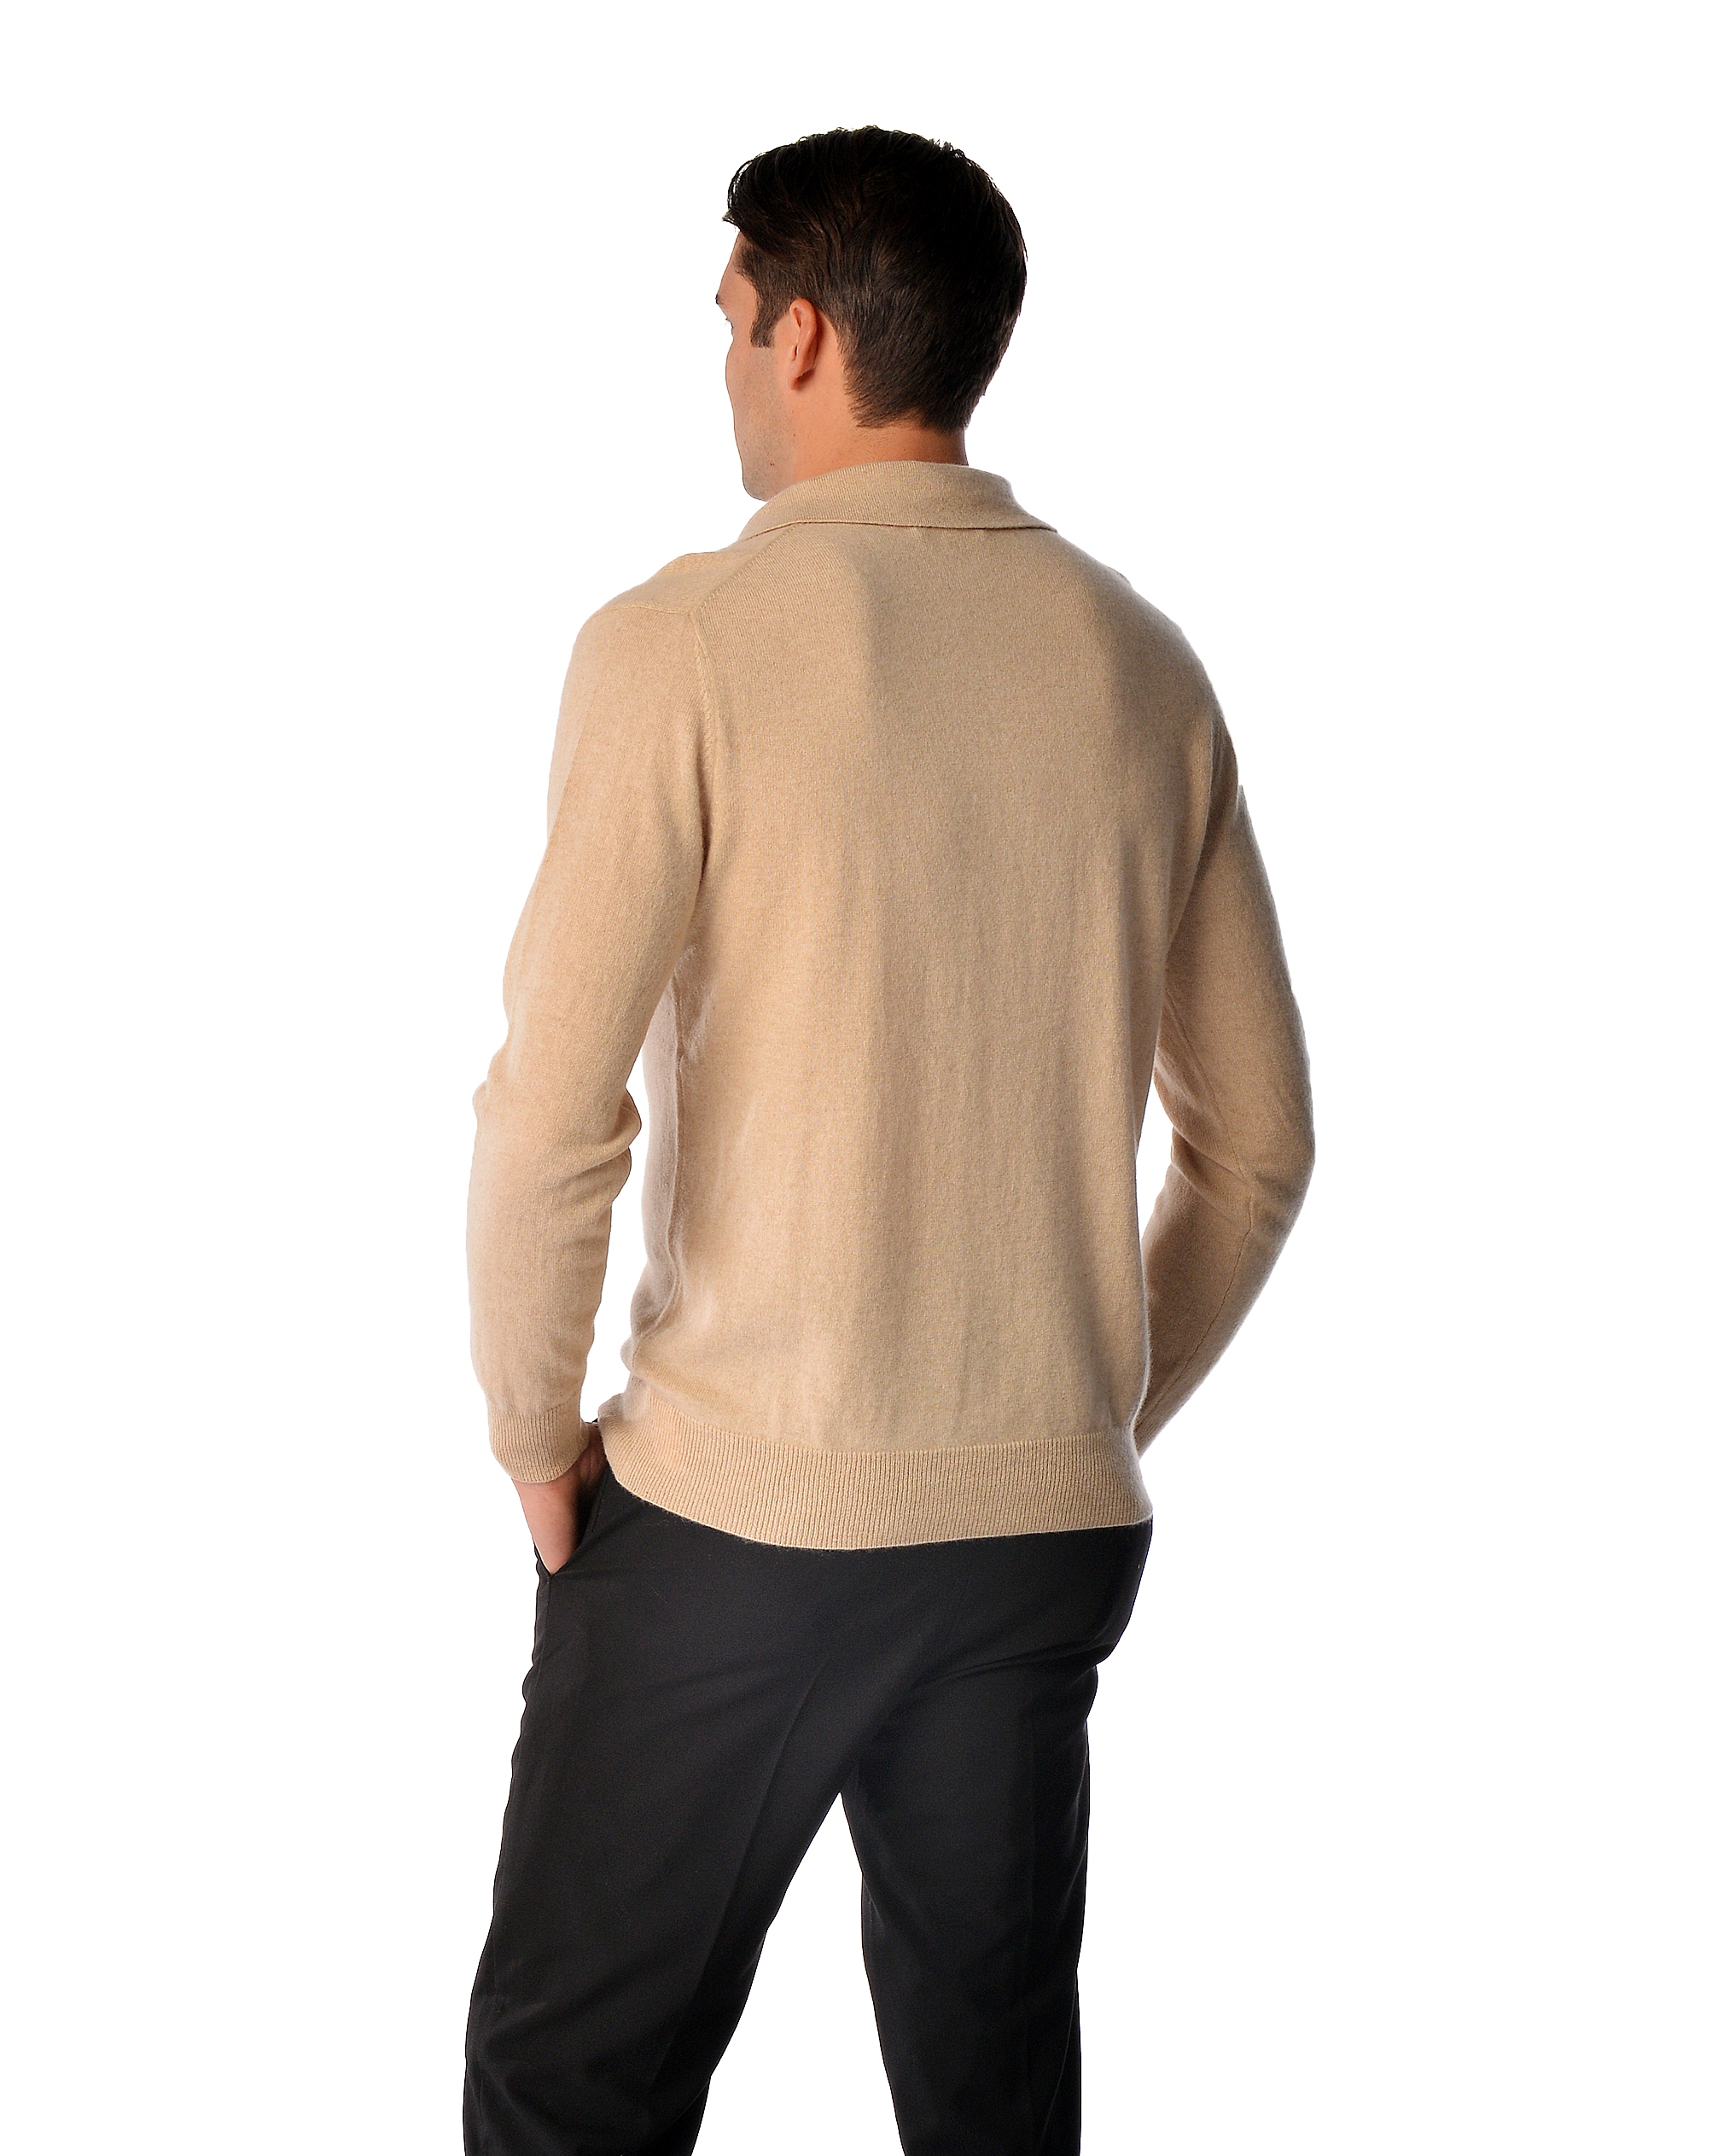 Men\'s Pure Cashmere Polo Sweater (Camel, Medium)